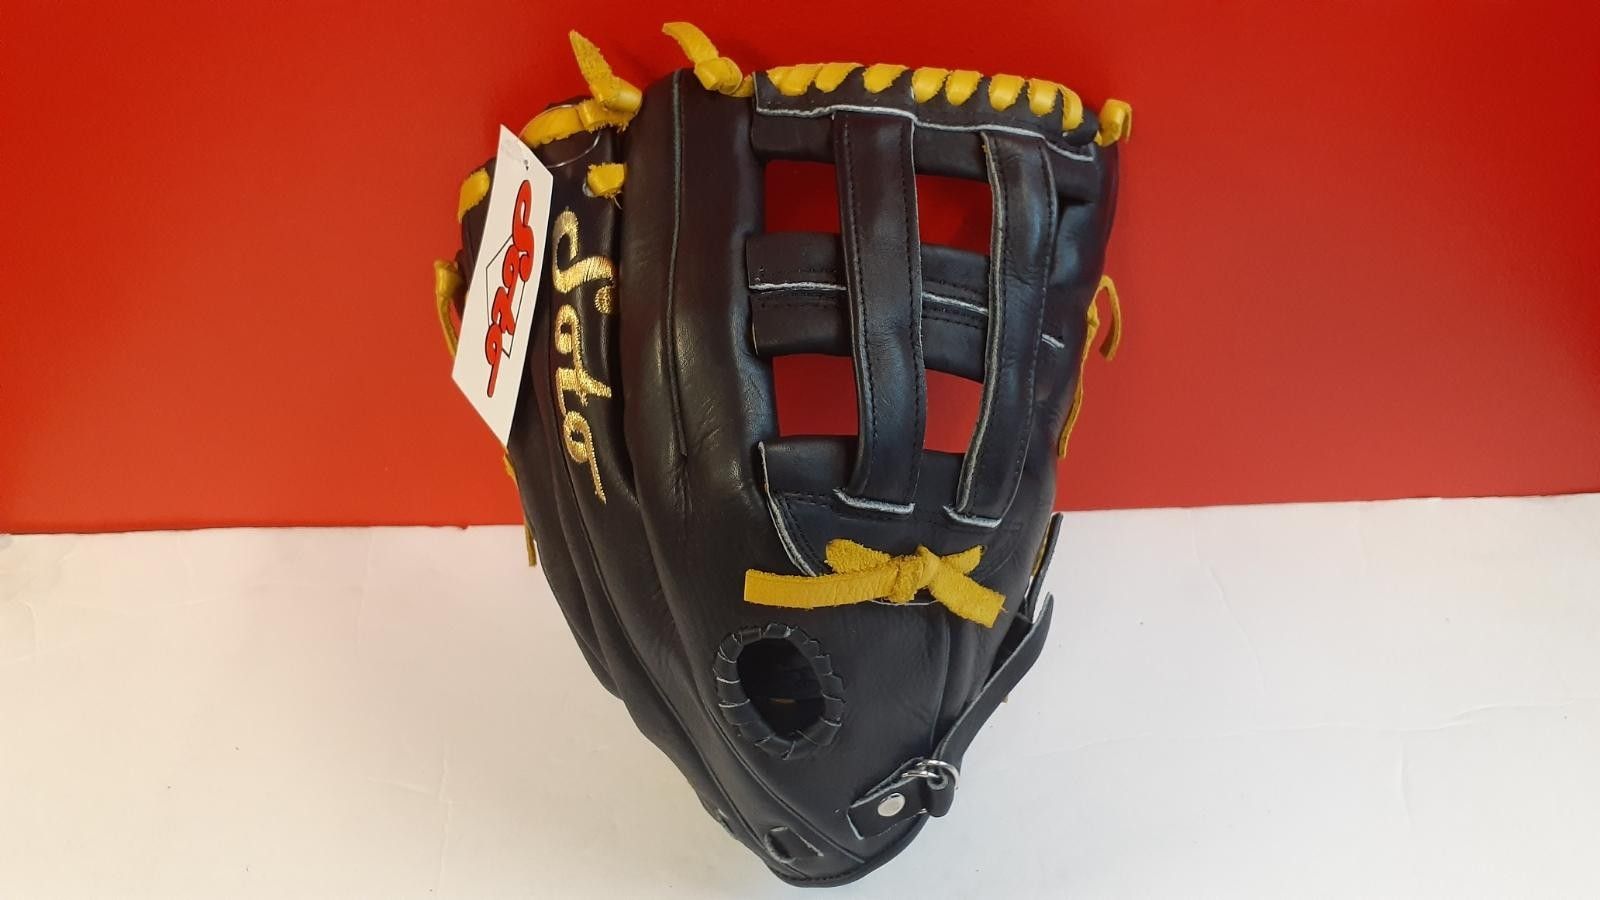 Baseball softball glove made in mexico